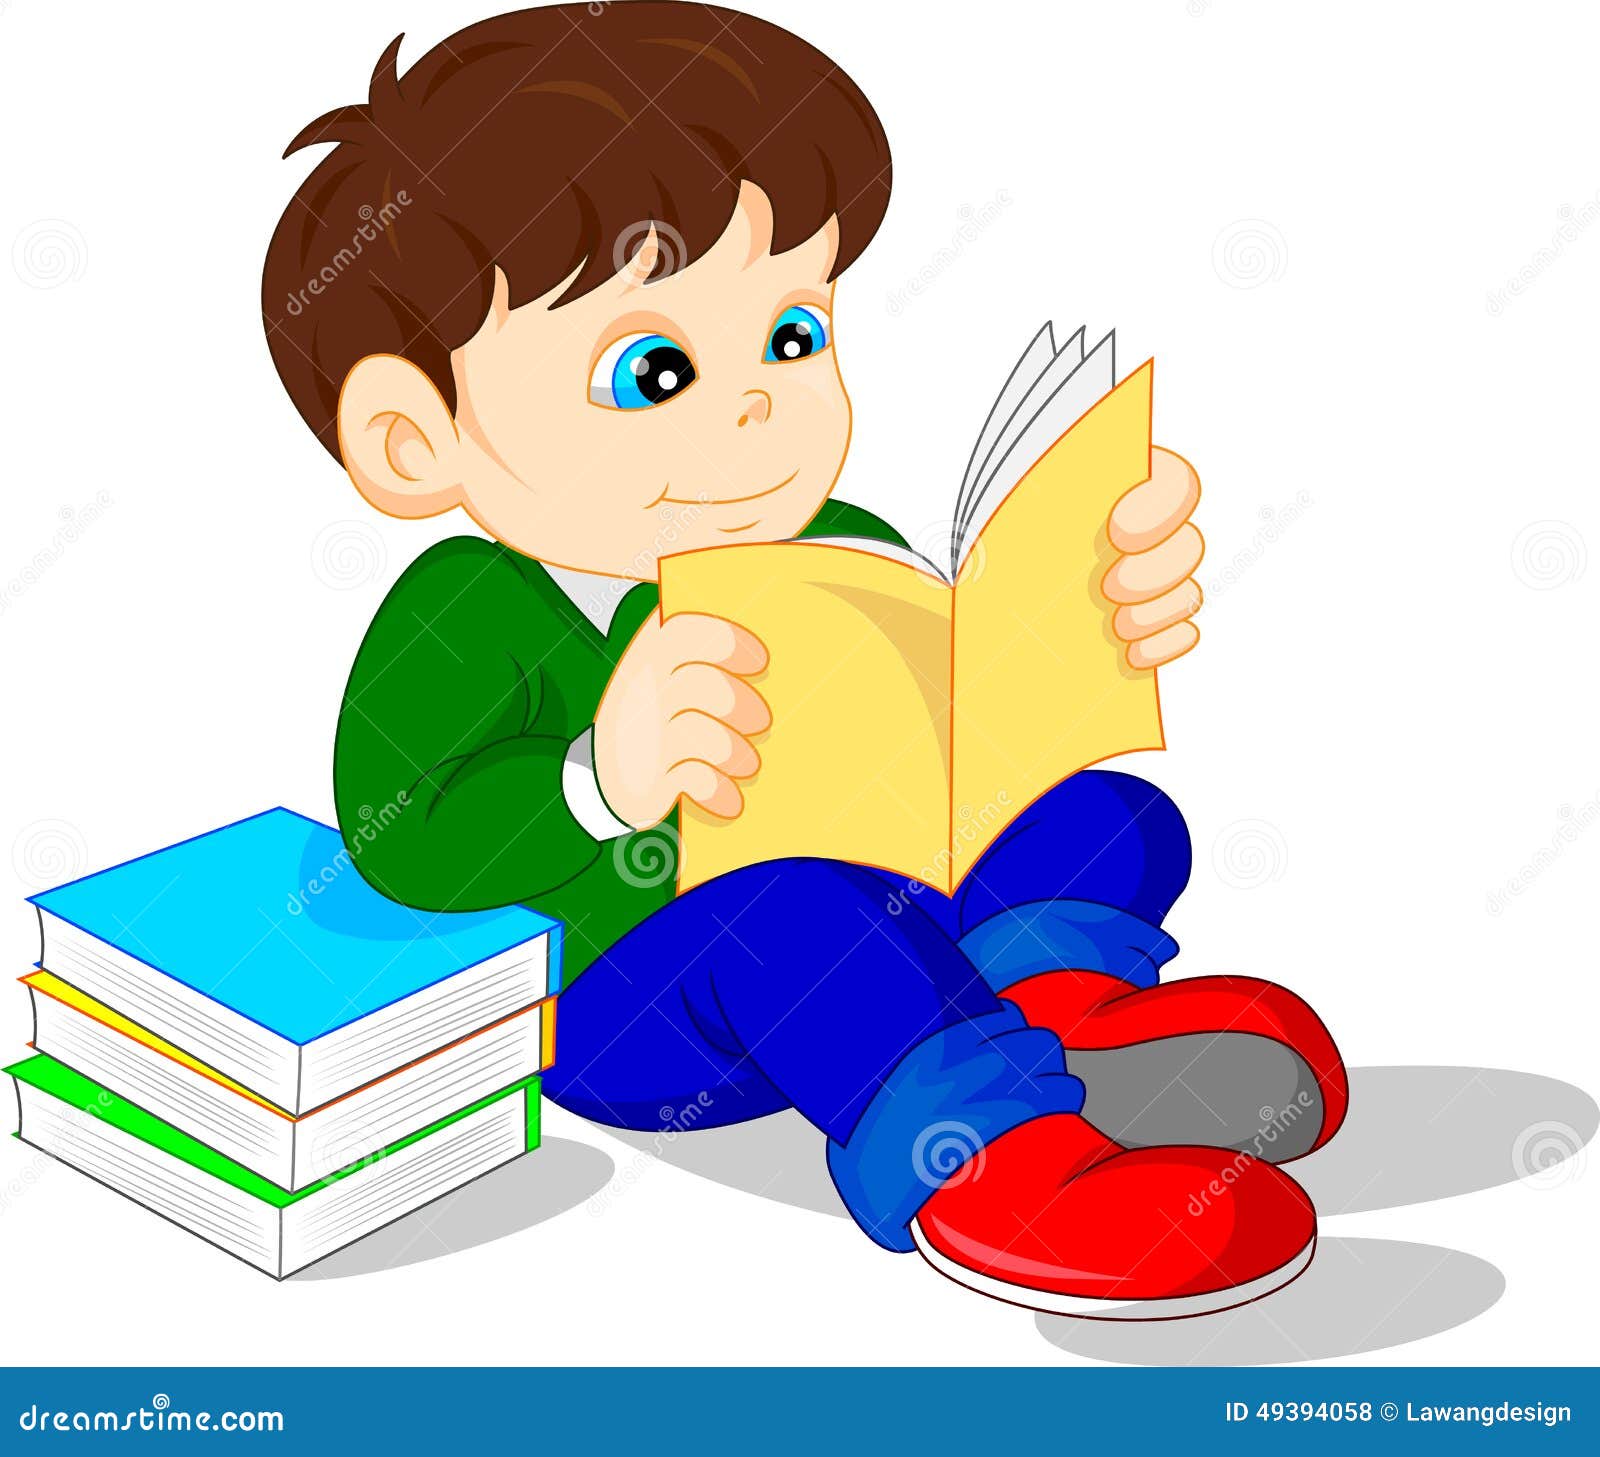 Cute boy reading books